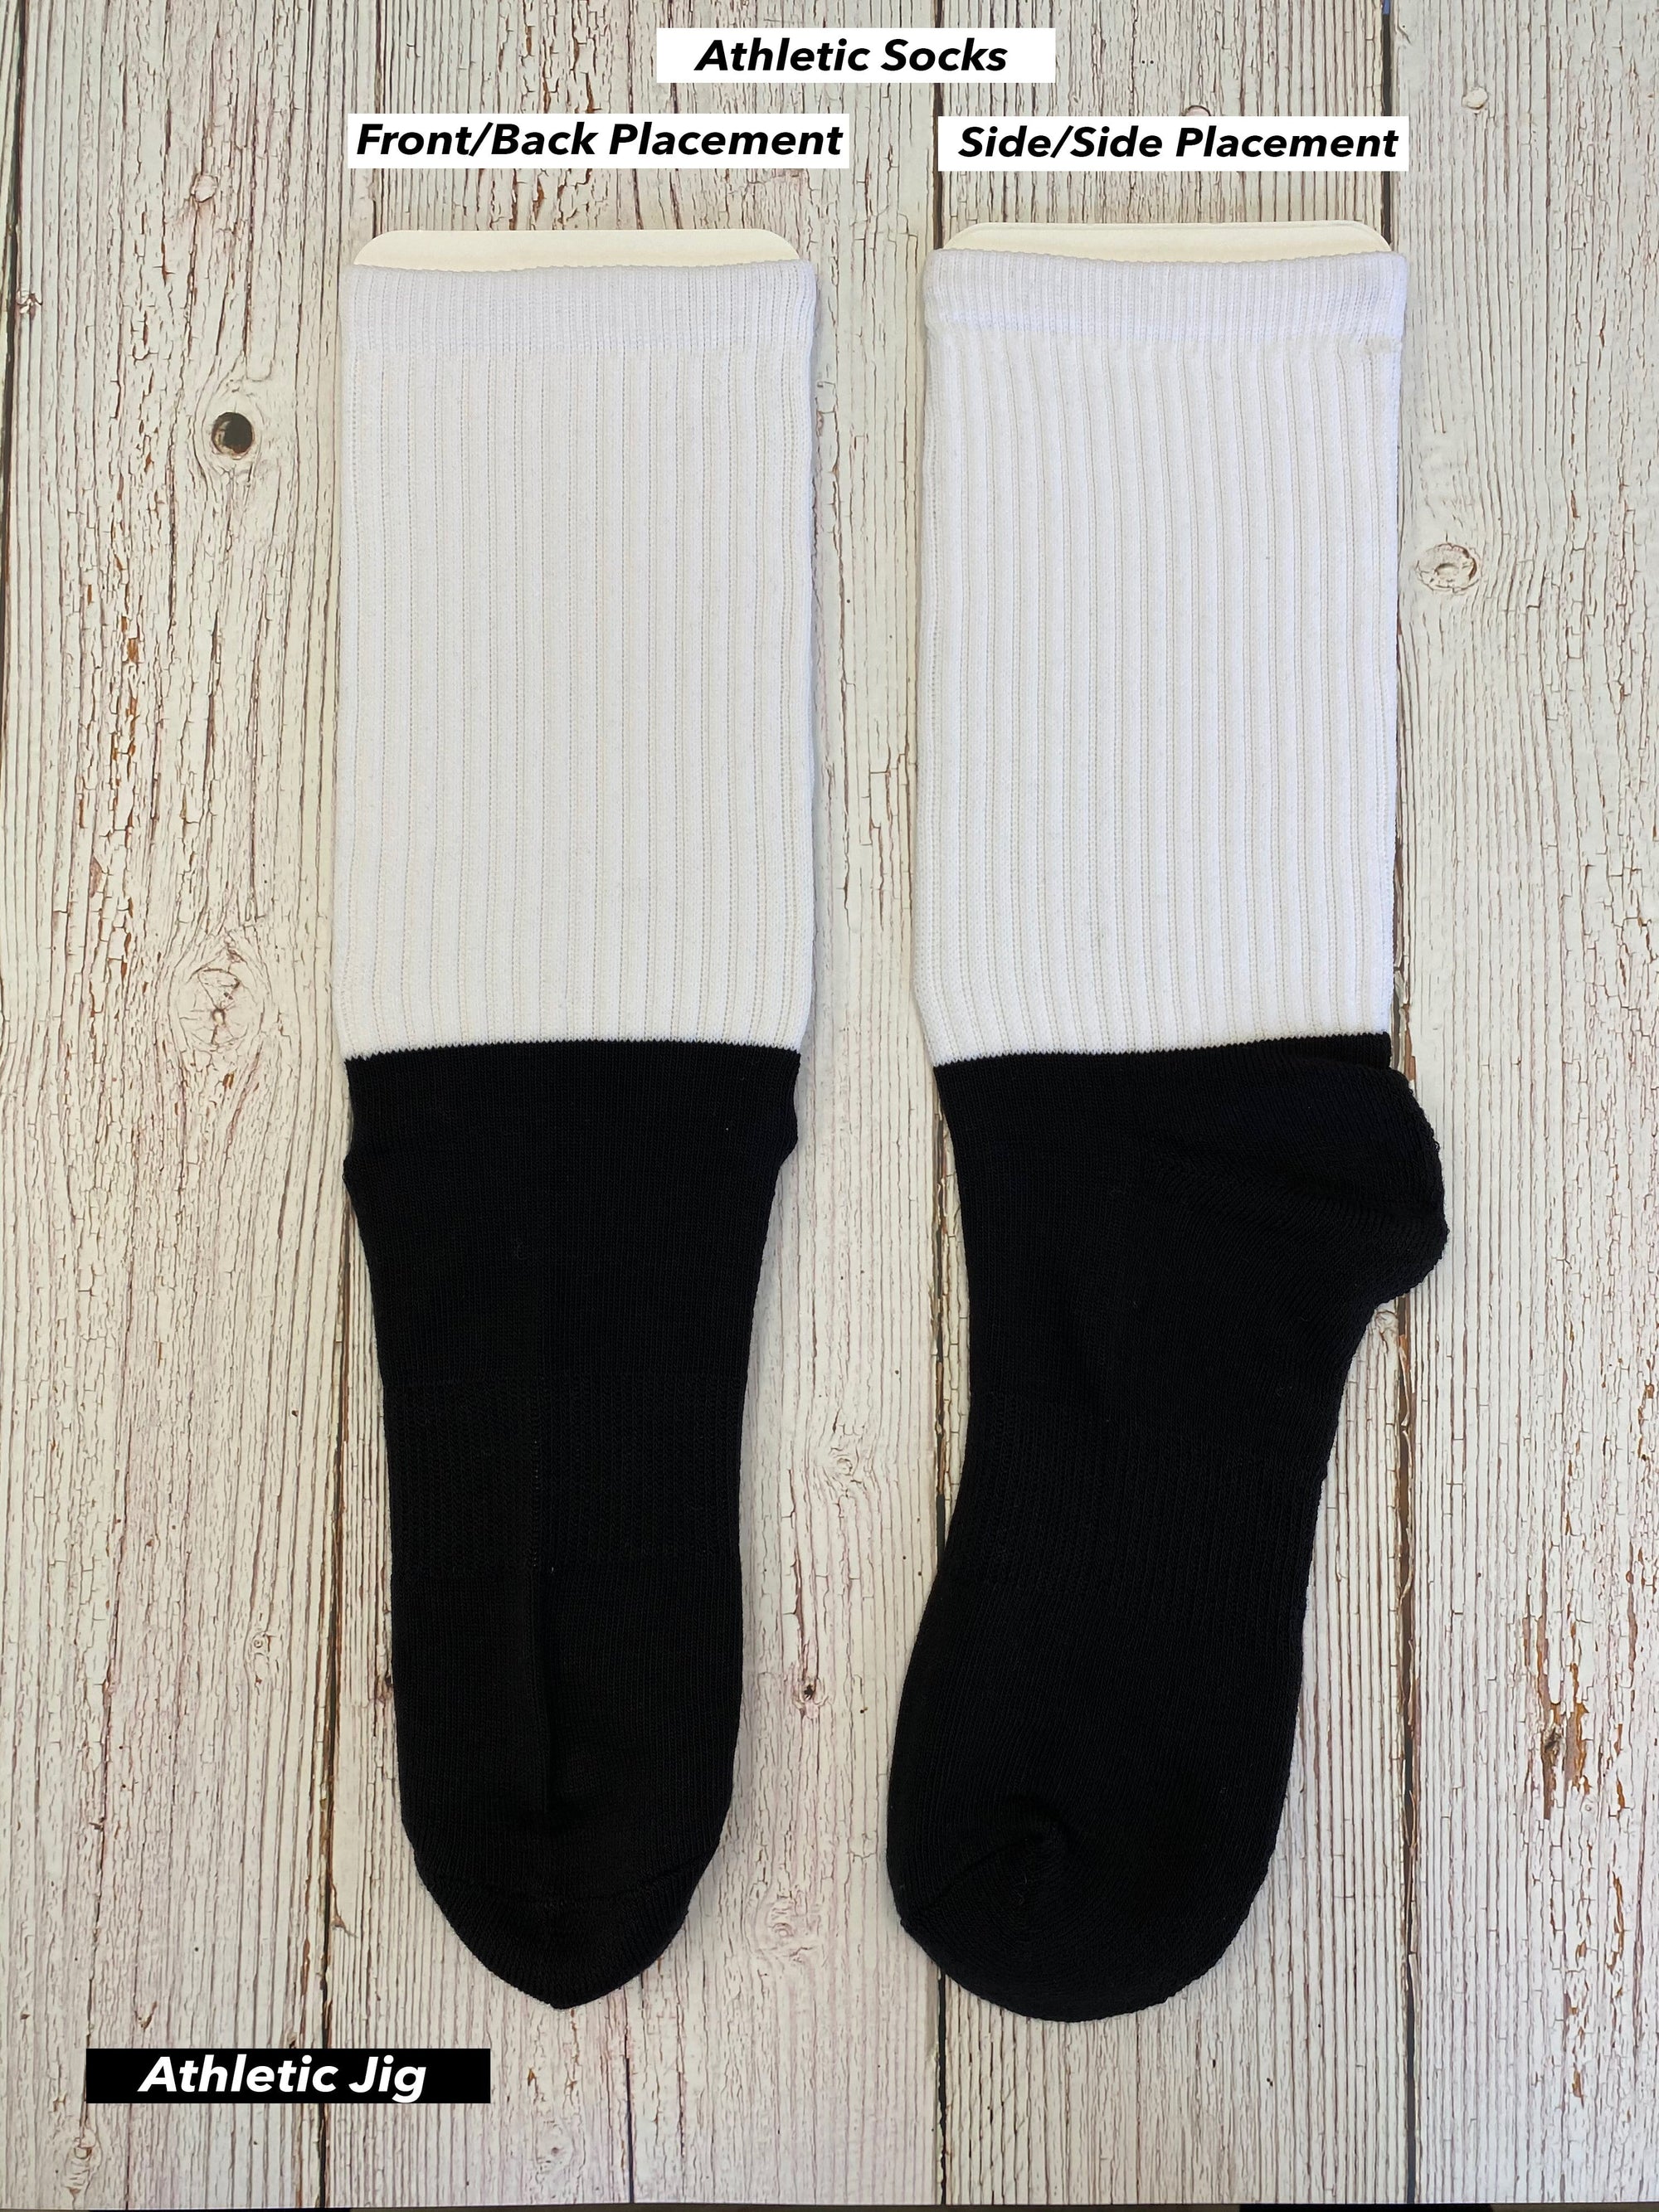 Inserts/Jigs for Athletic Socks